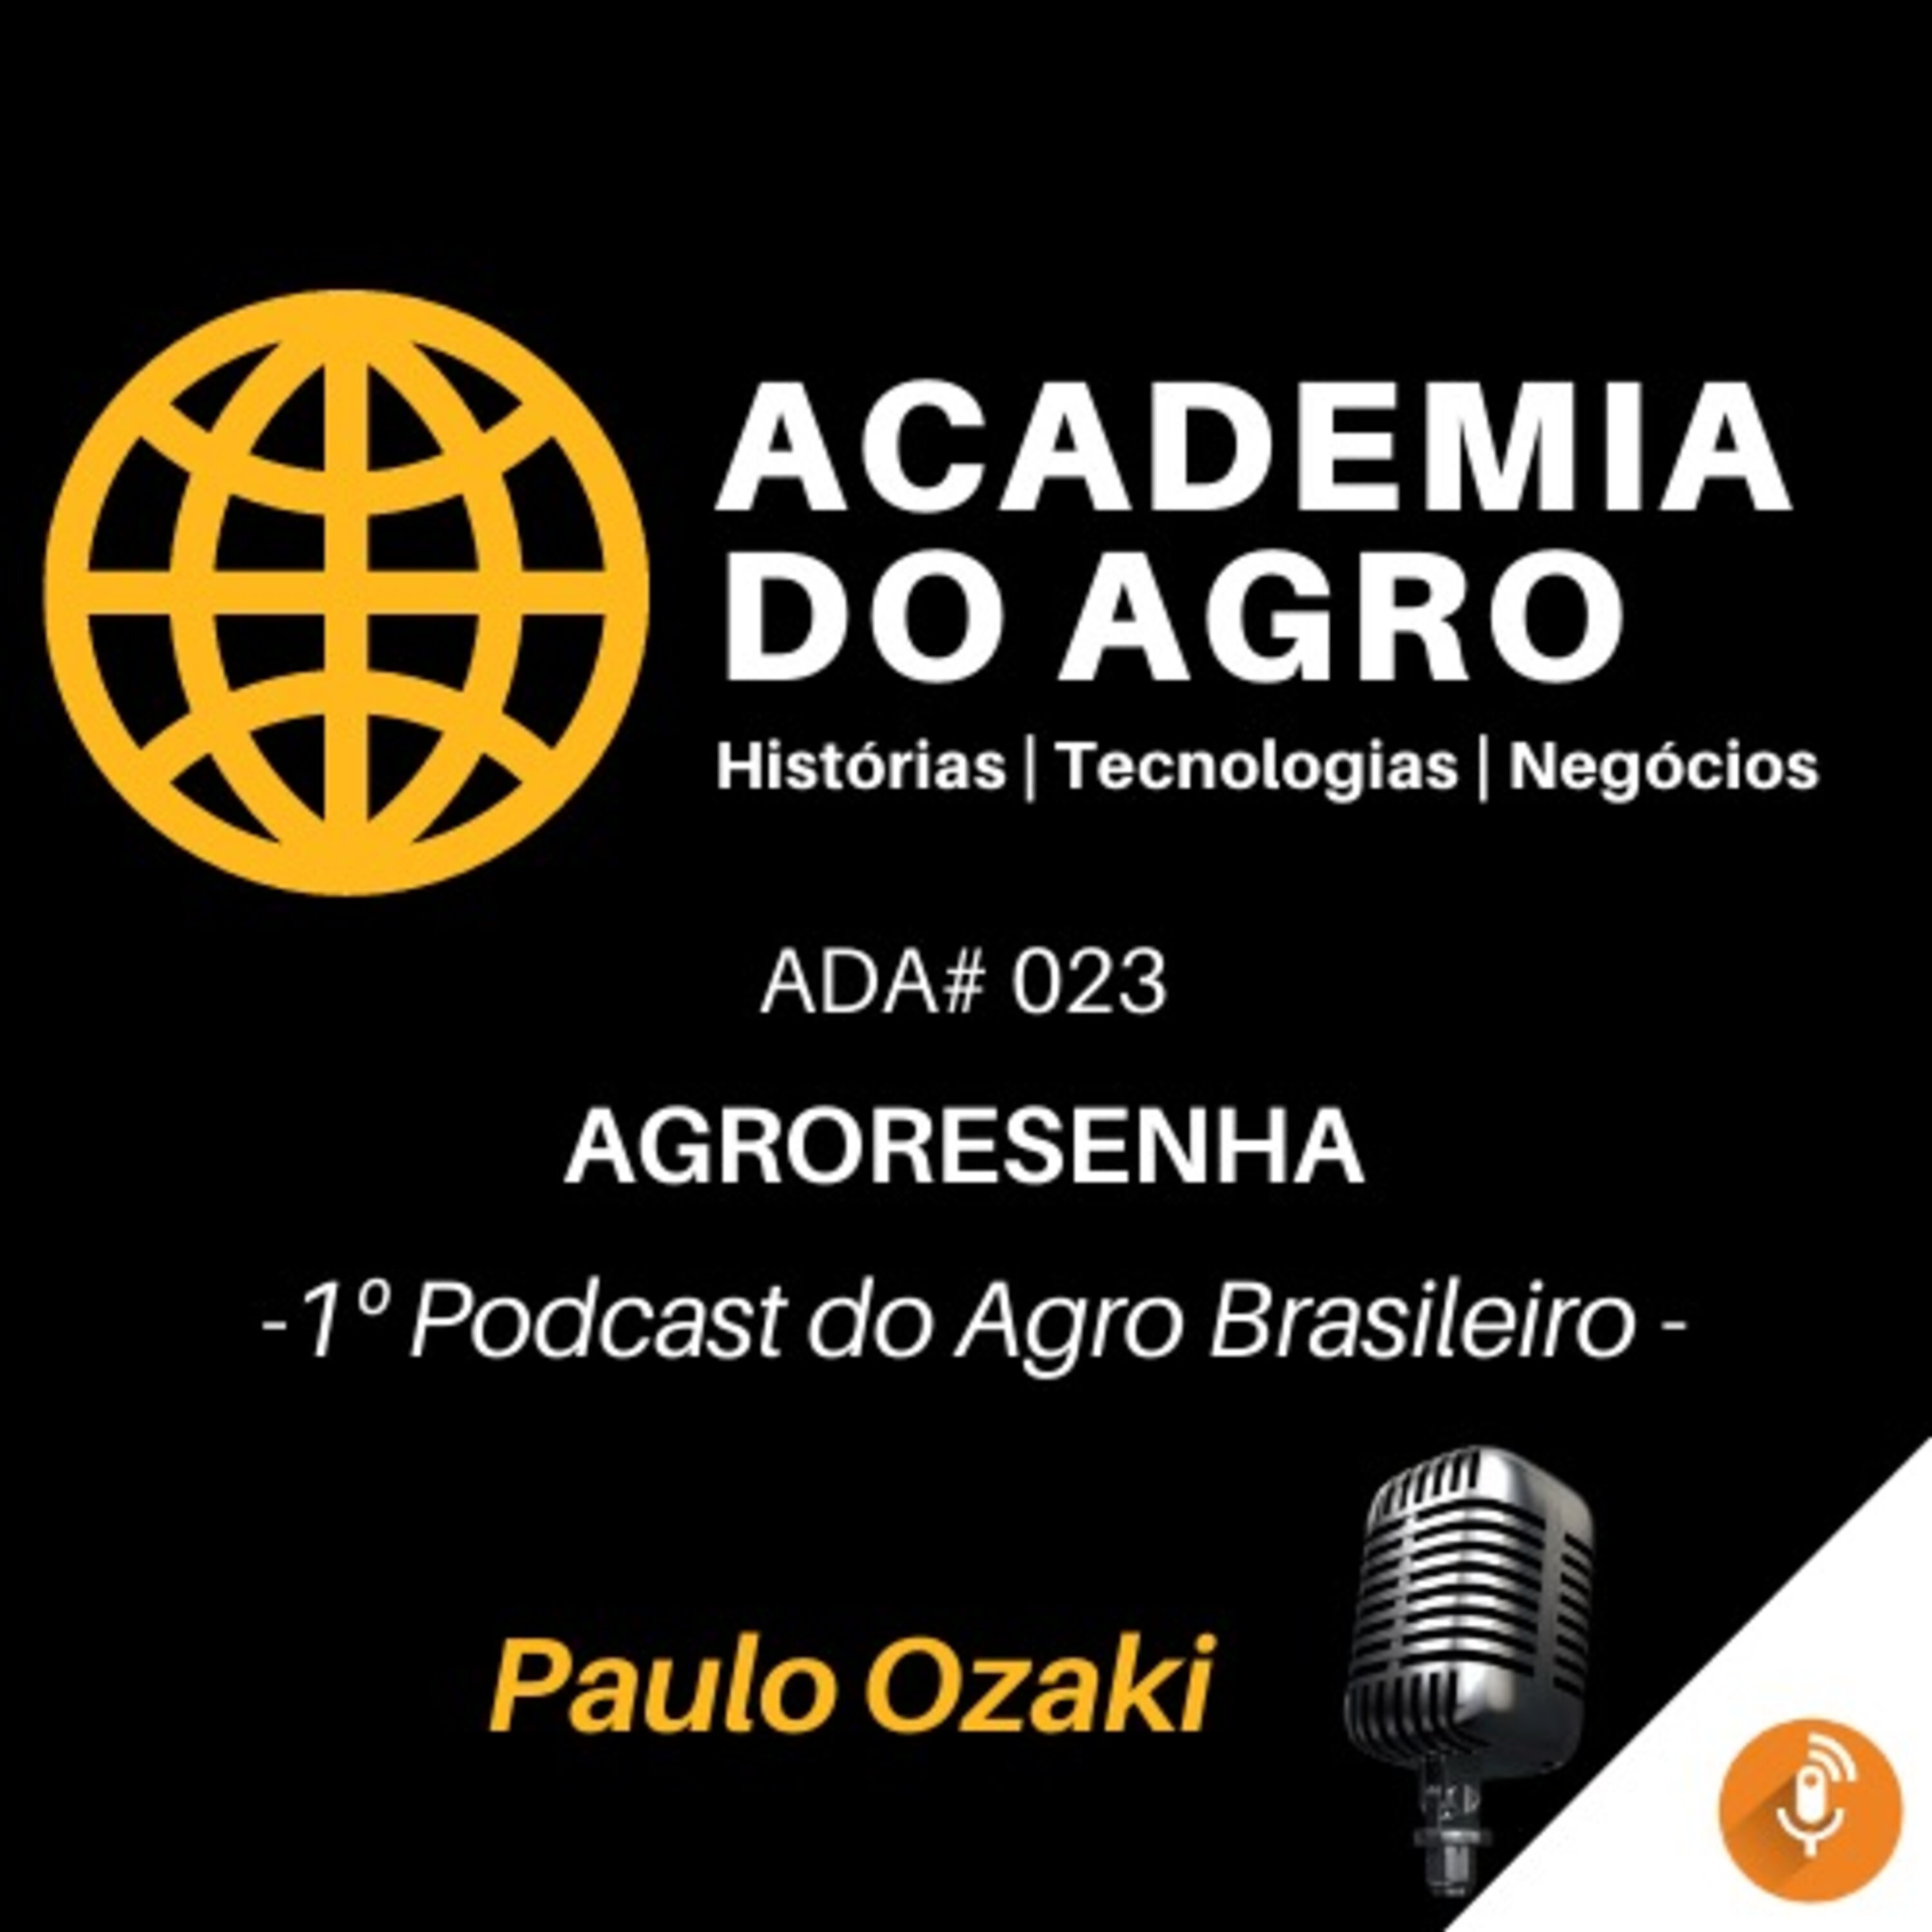 Agroresenha - 1º Podcast do Agro Brasileiro